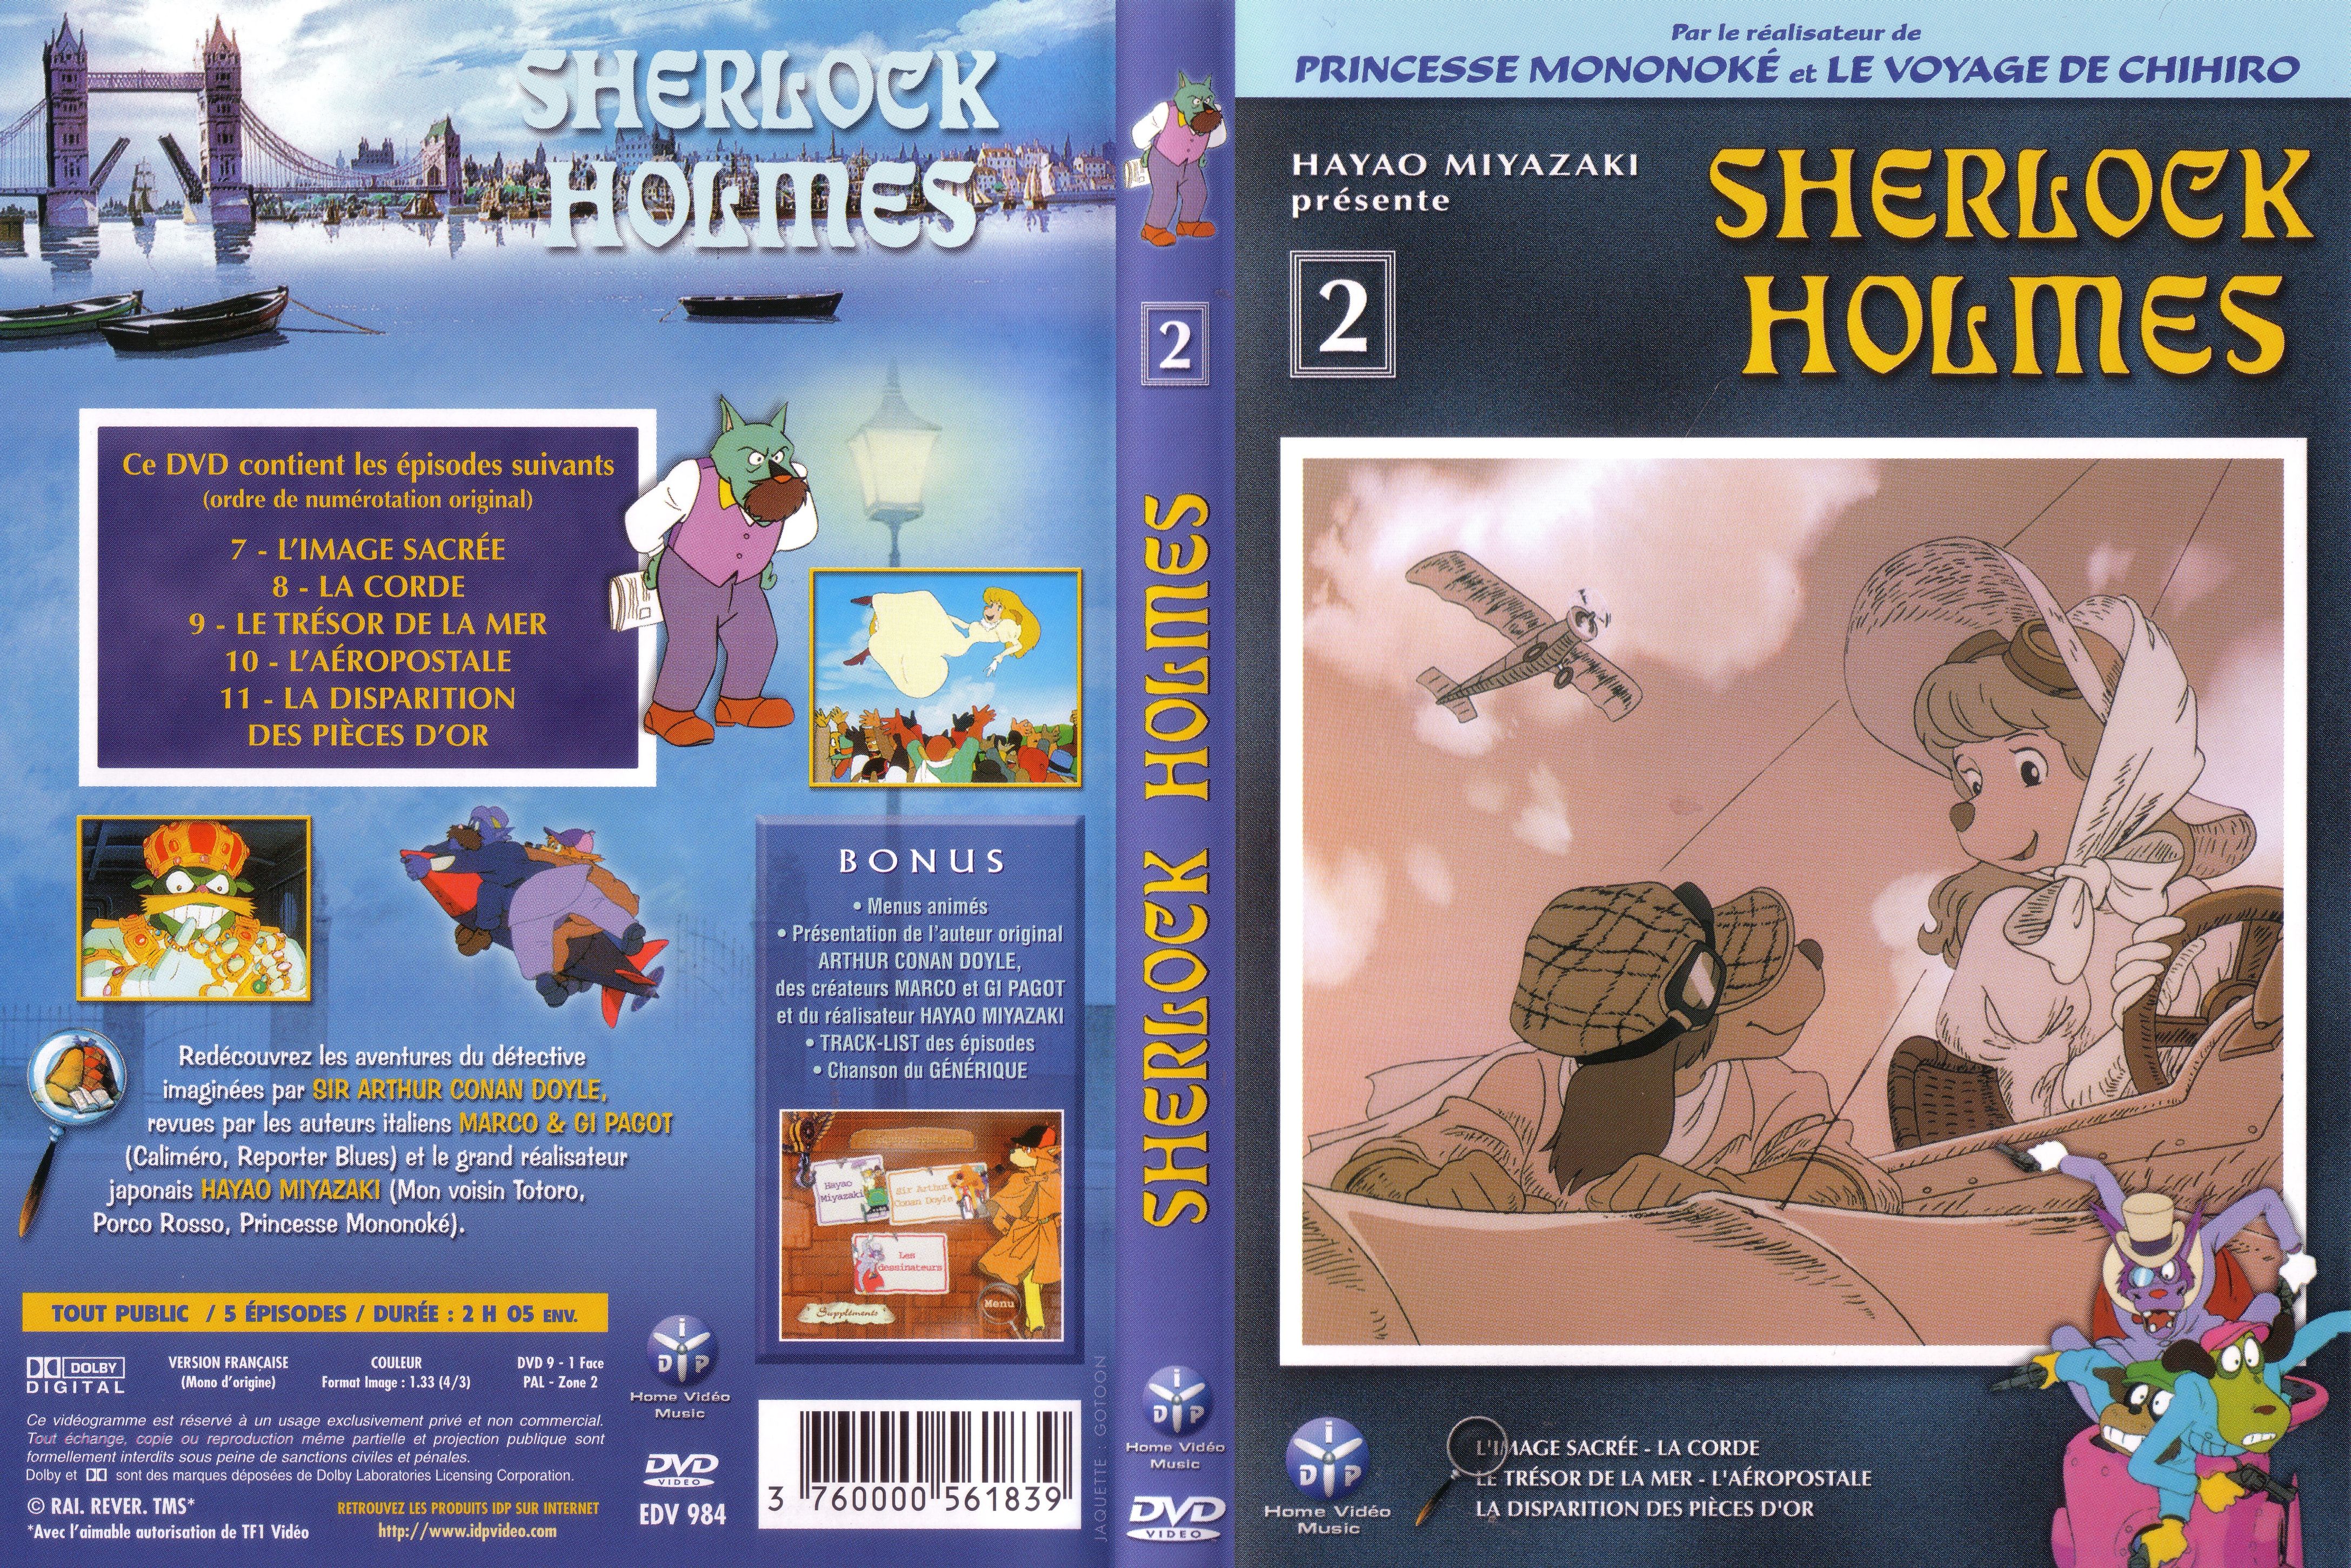 Jaquette DVD Sherlock Holmes vol 2